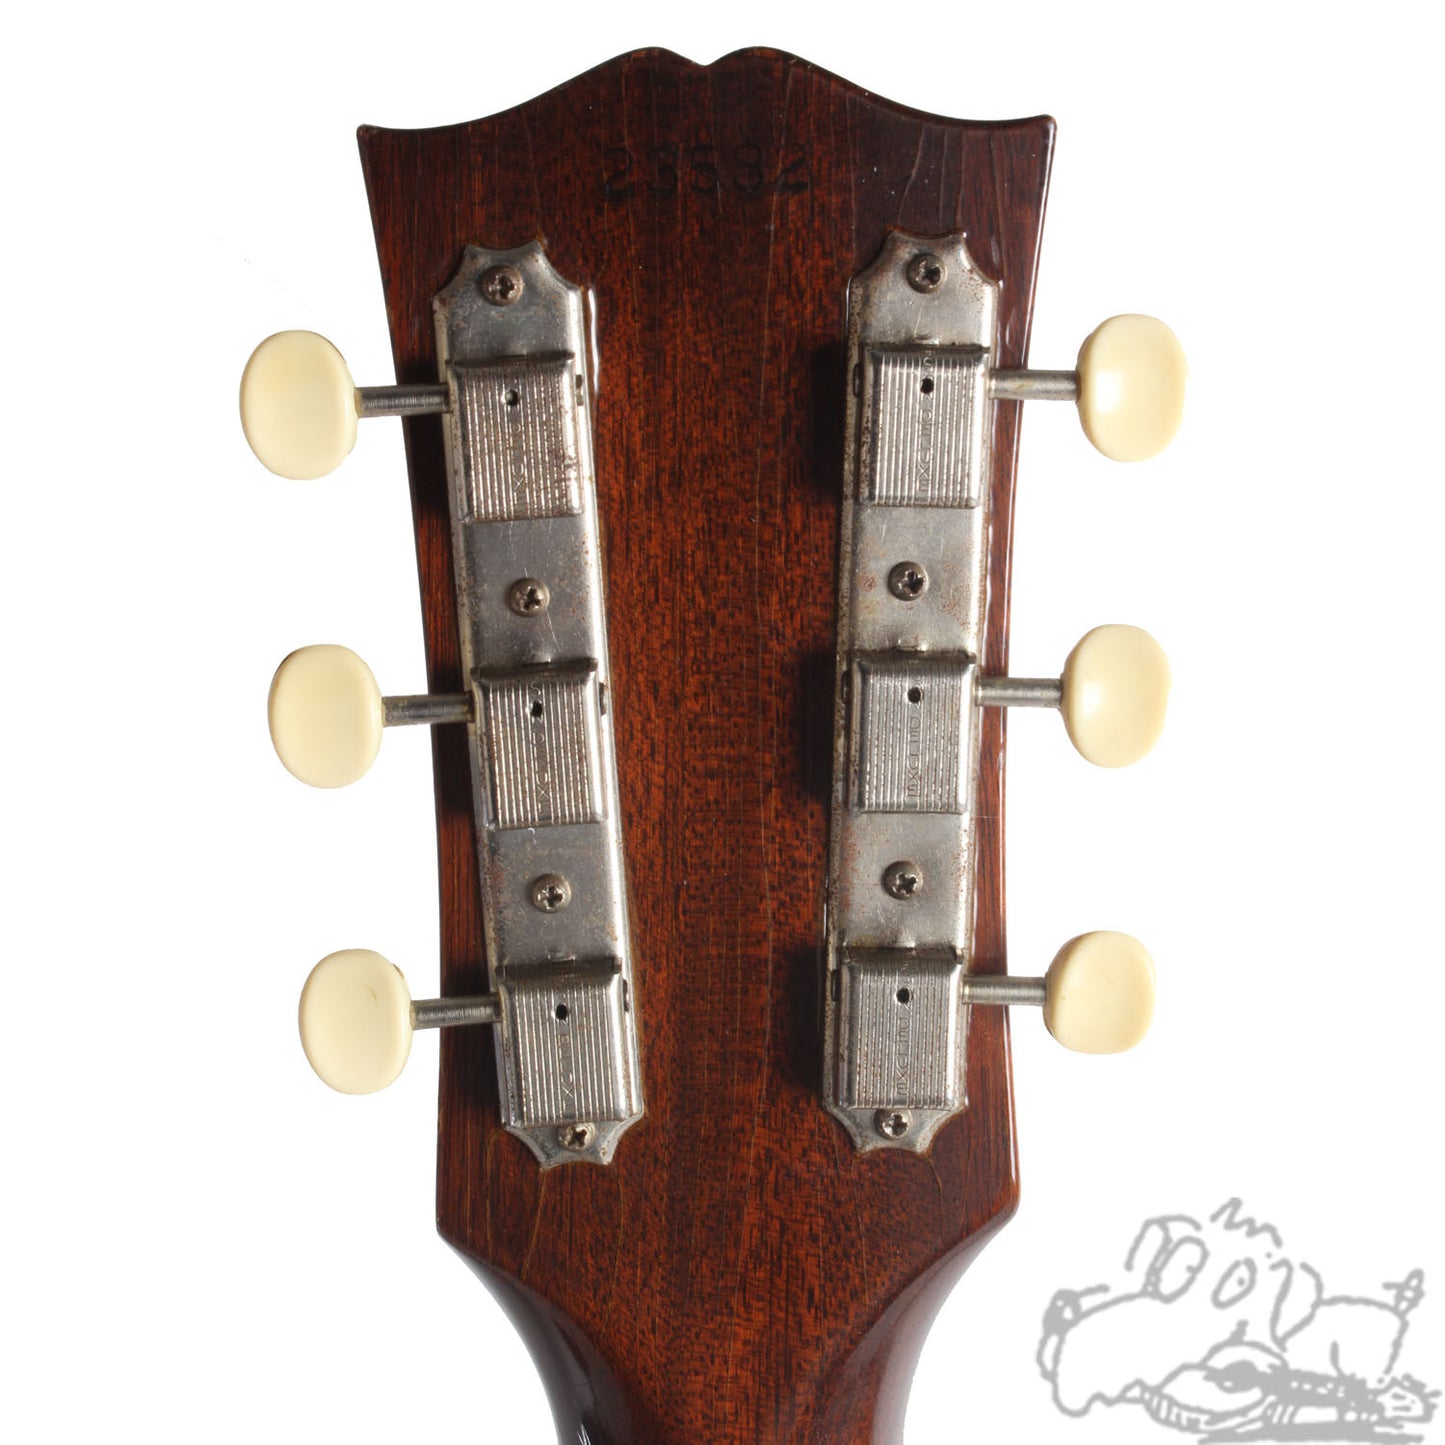 1961 Gibson J-50